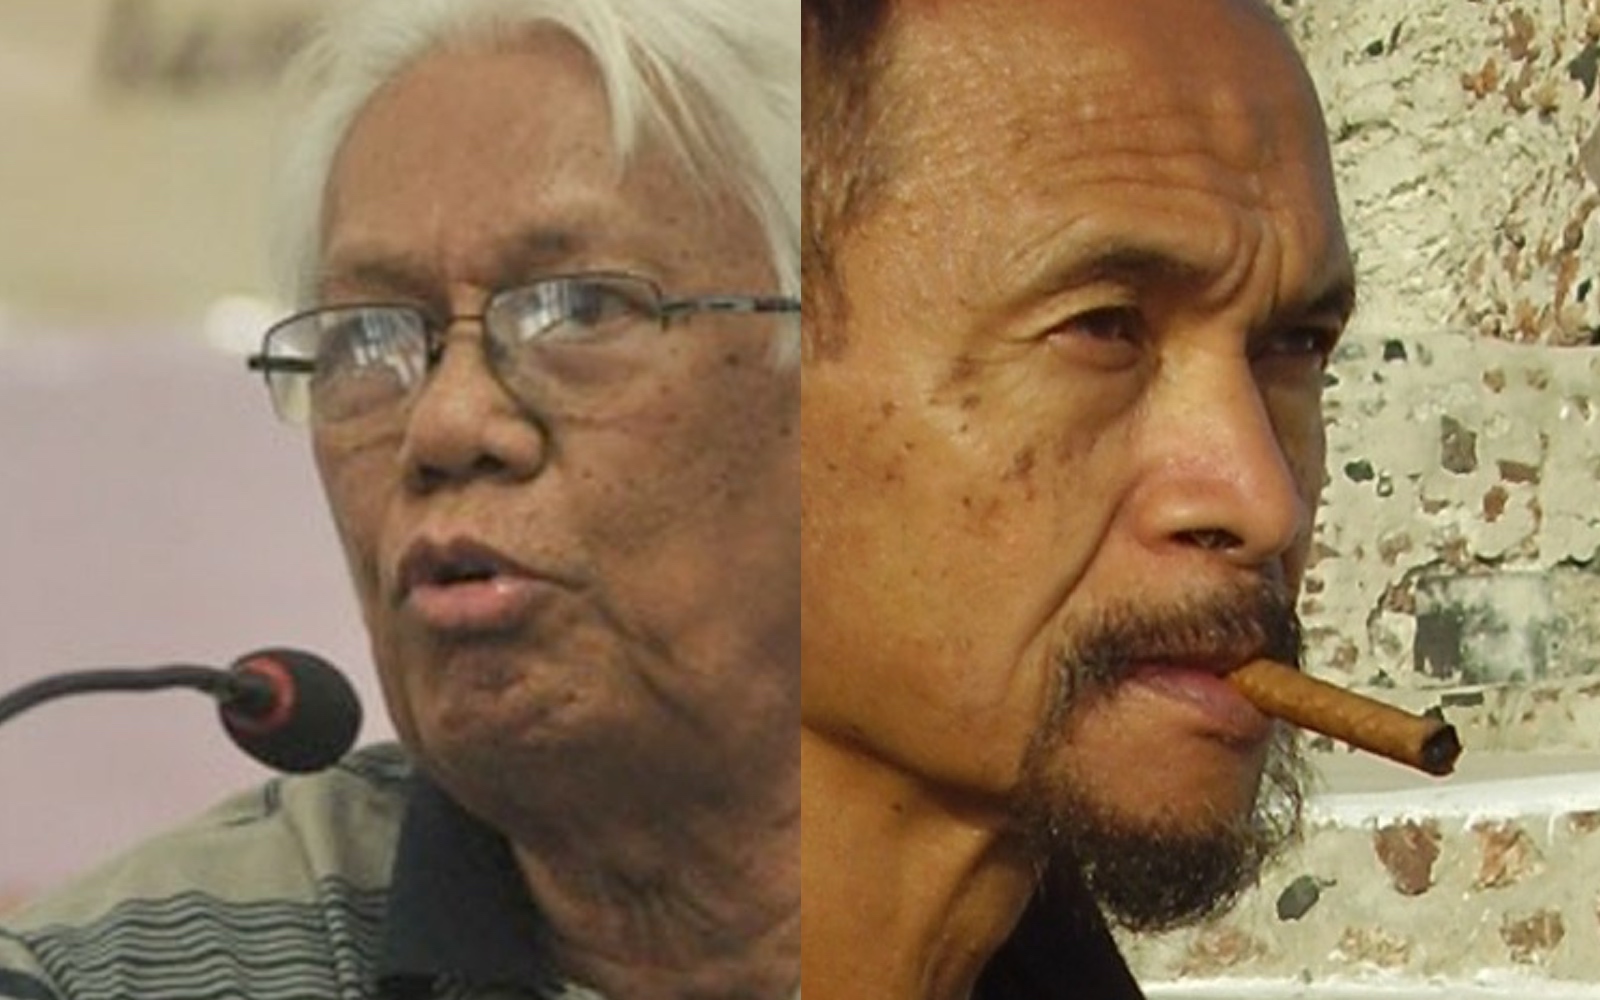 The faces of Putu Oka and Goenawan